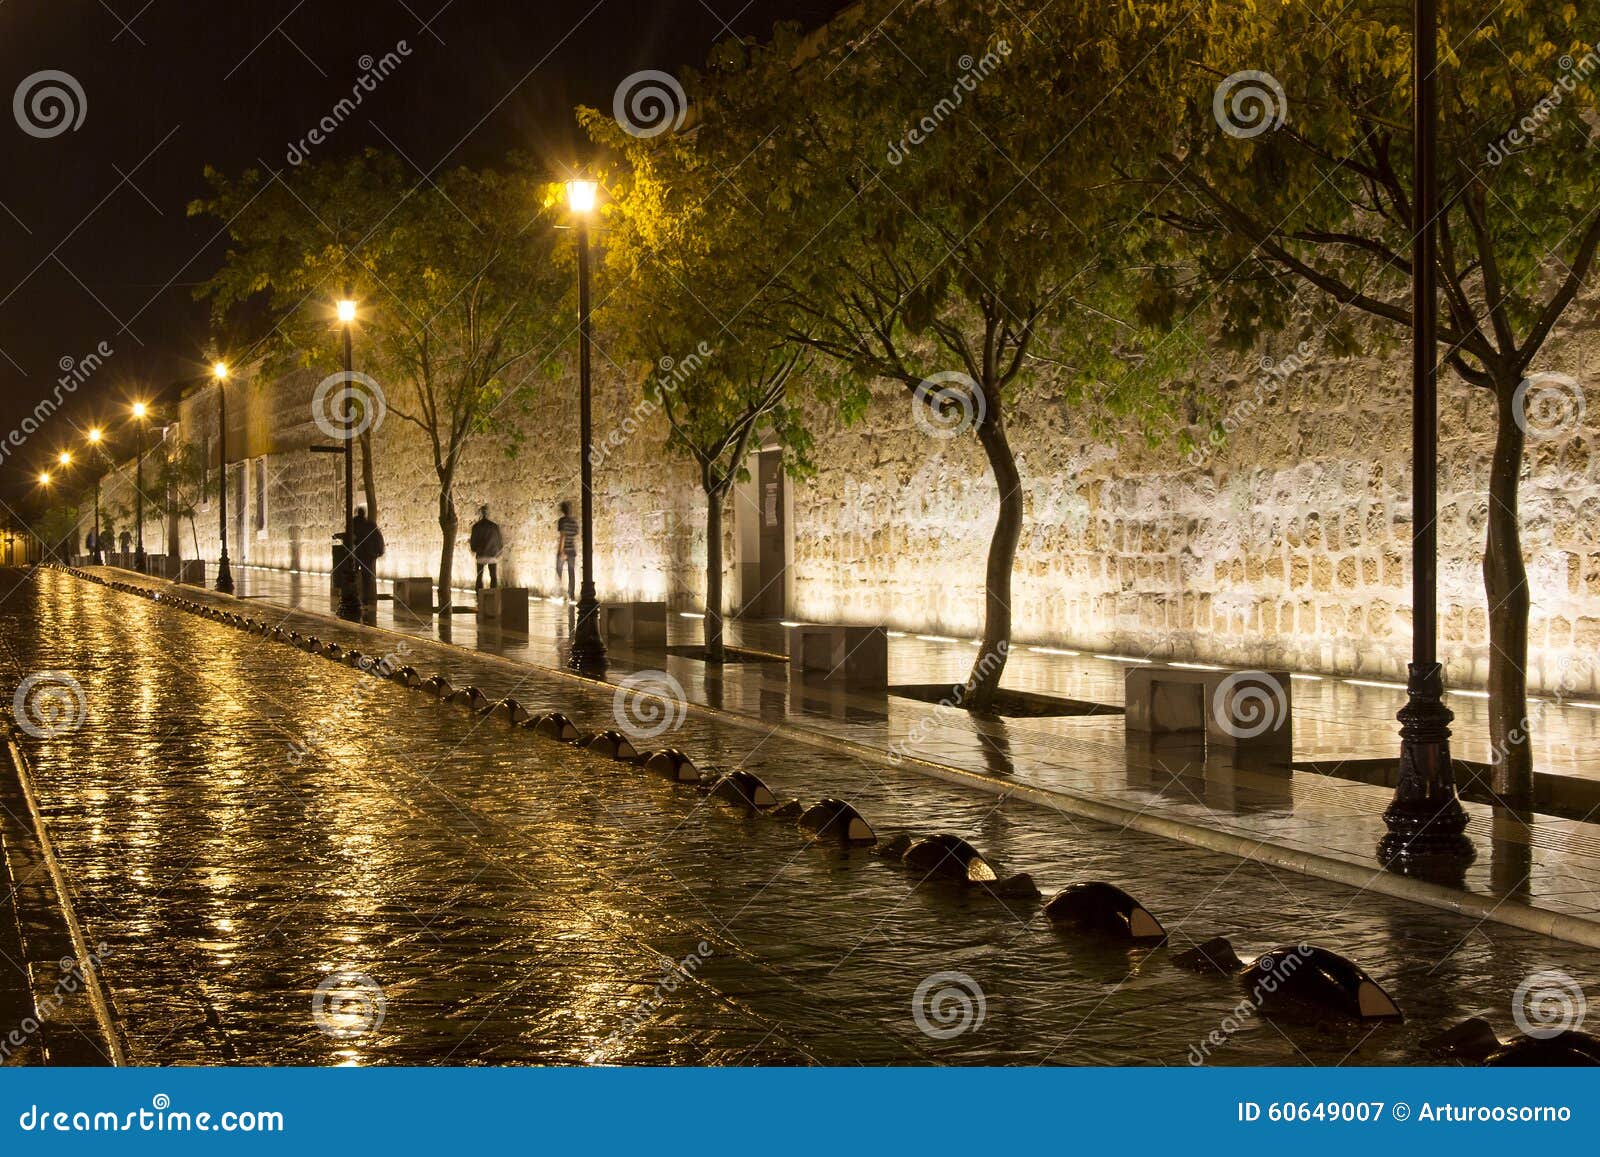 a street in oaxaca city at night